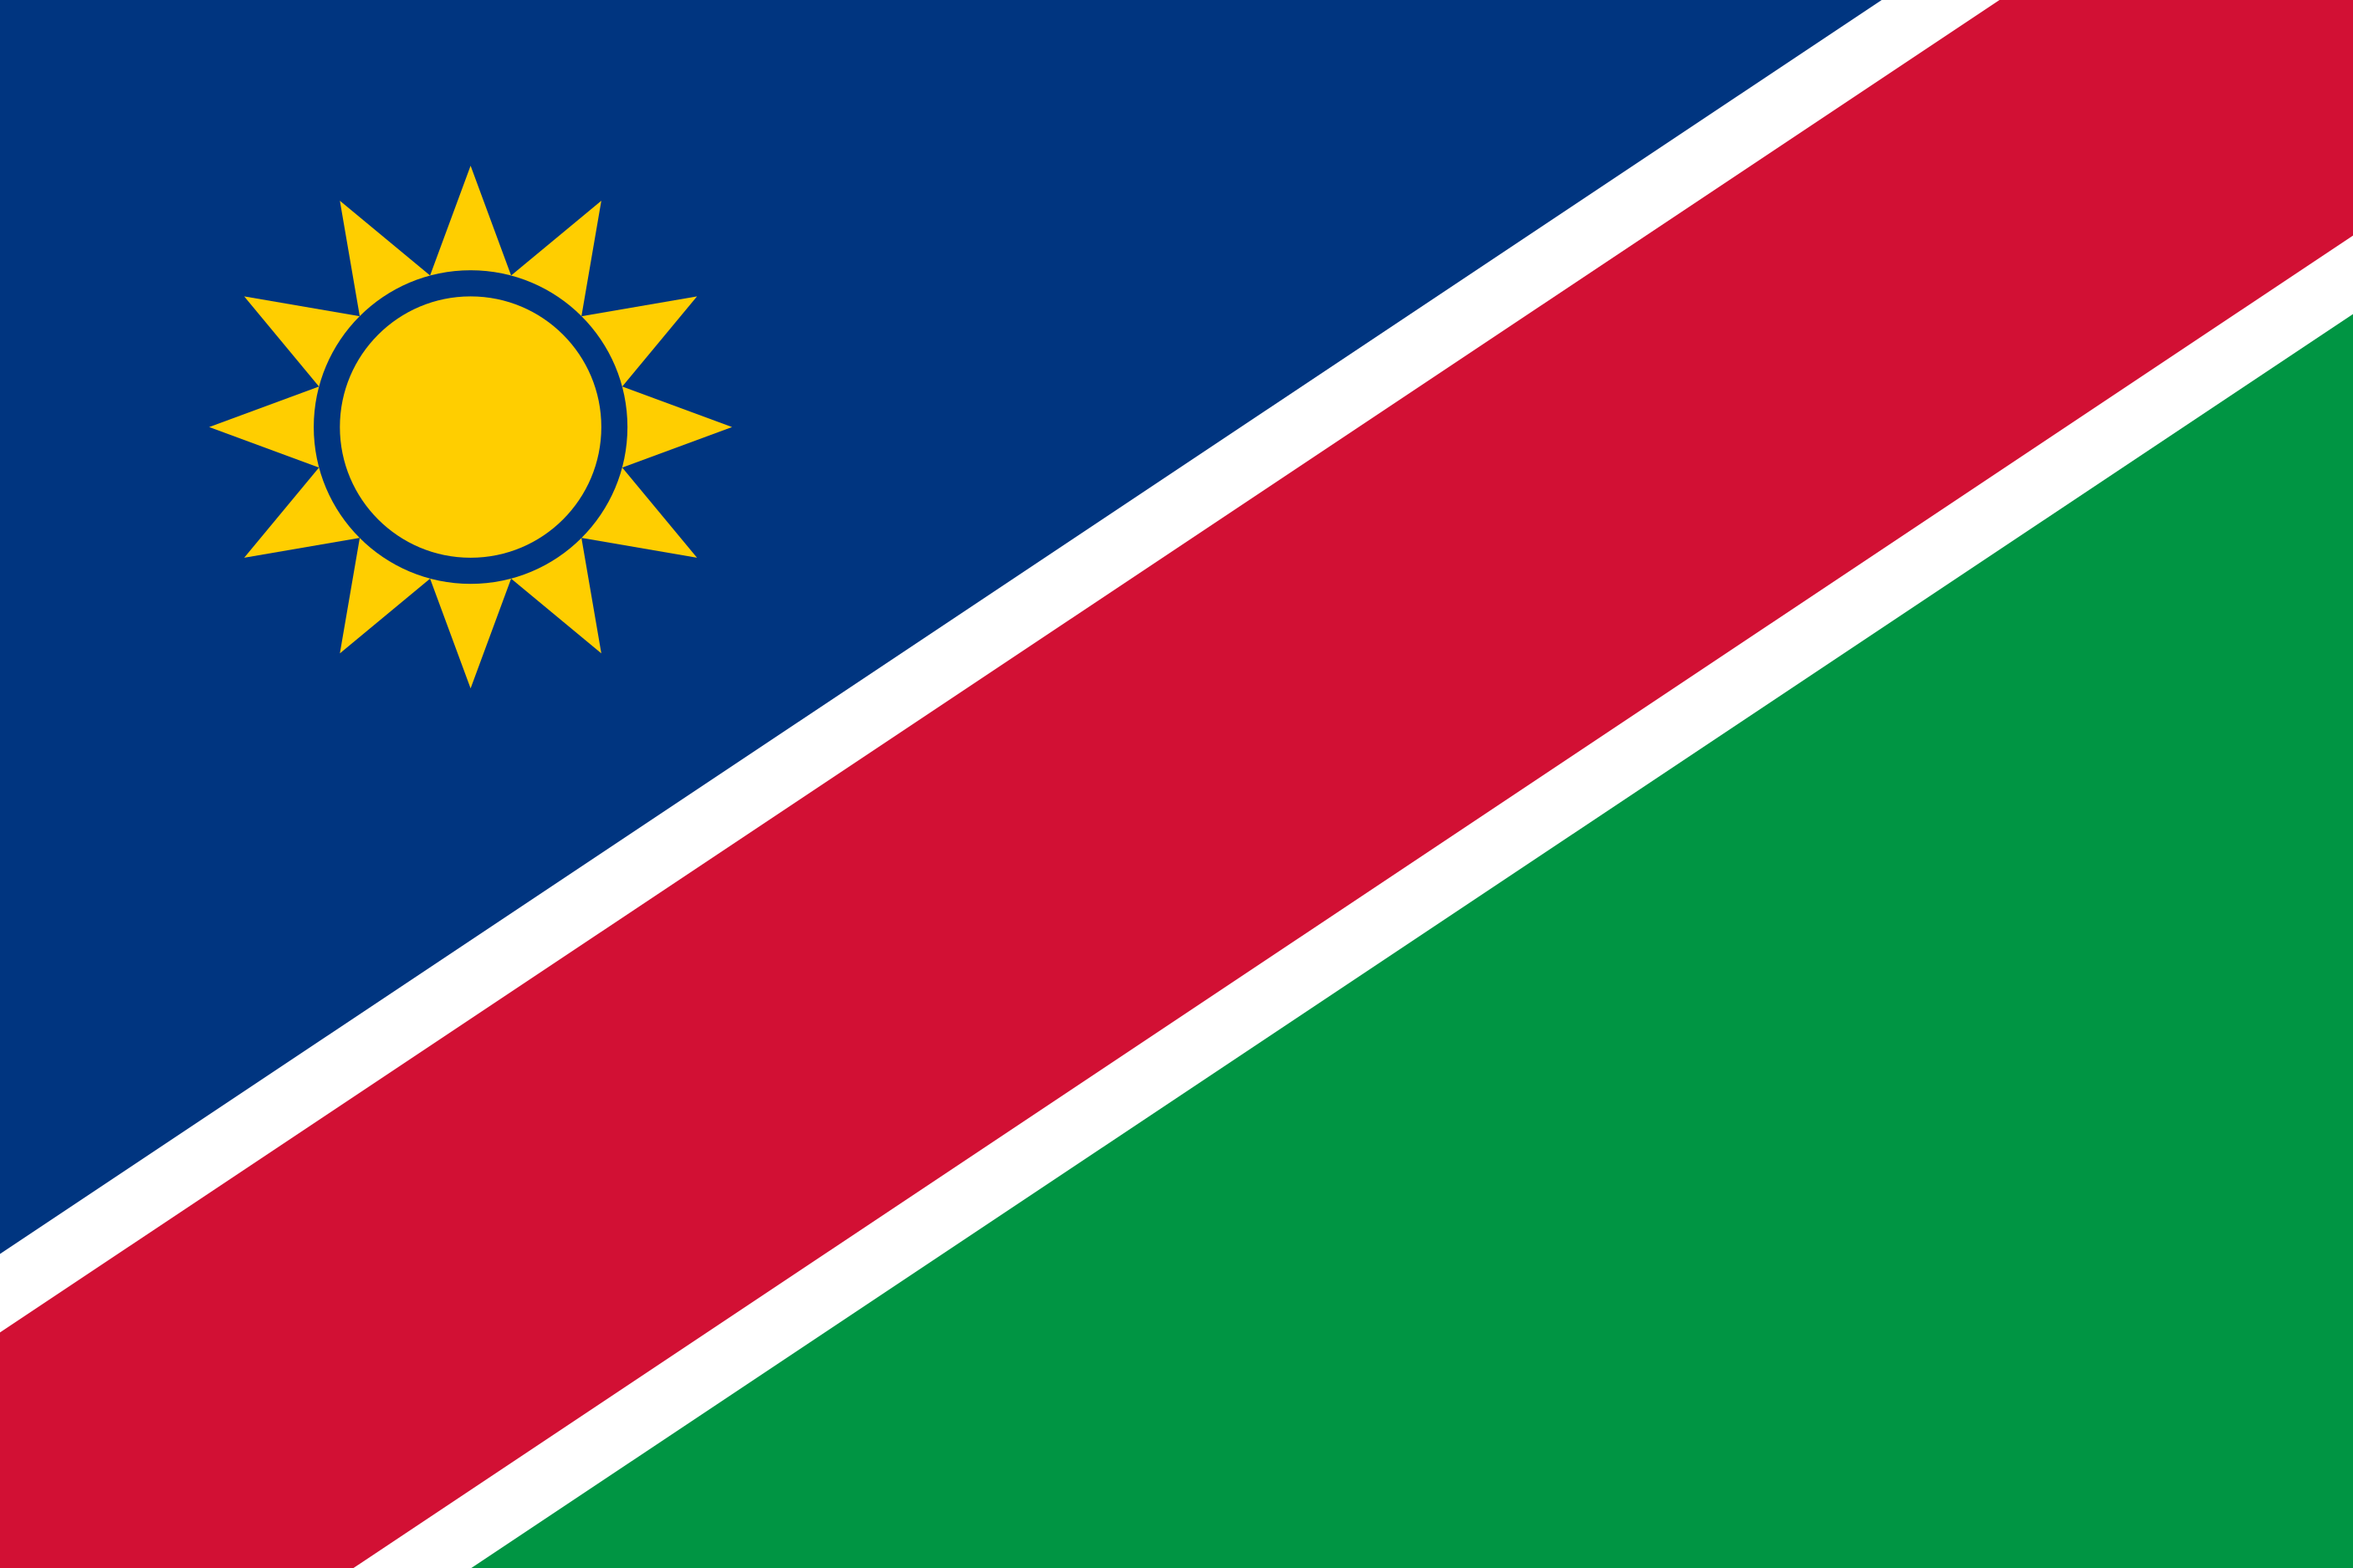 Free Namibia Flag Documents: PDF, DOC, DOCX, HTML & More!